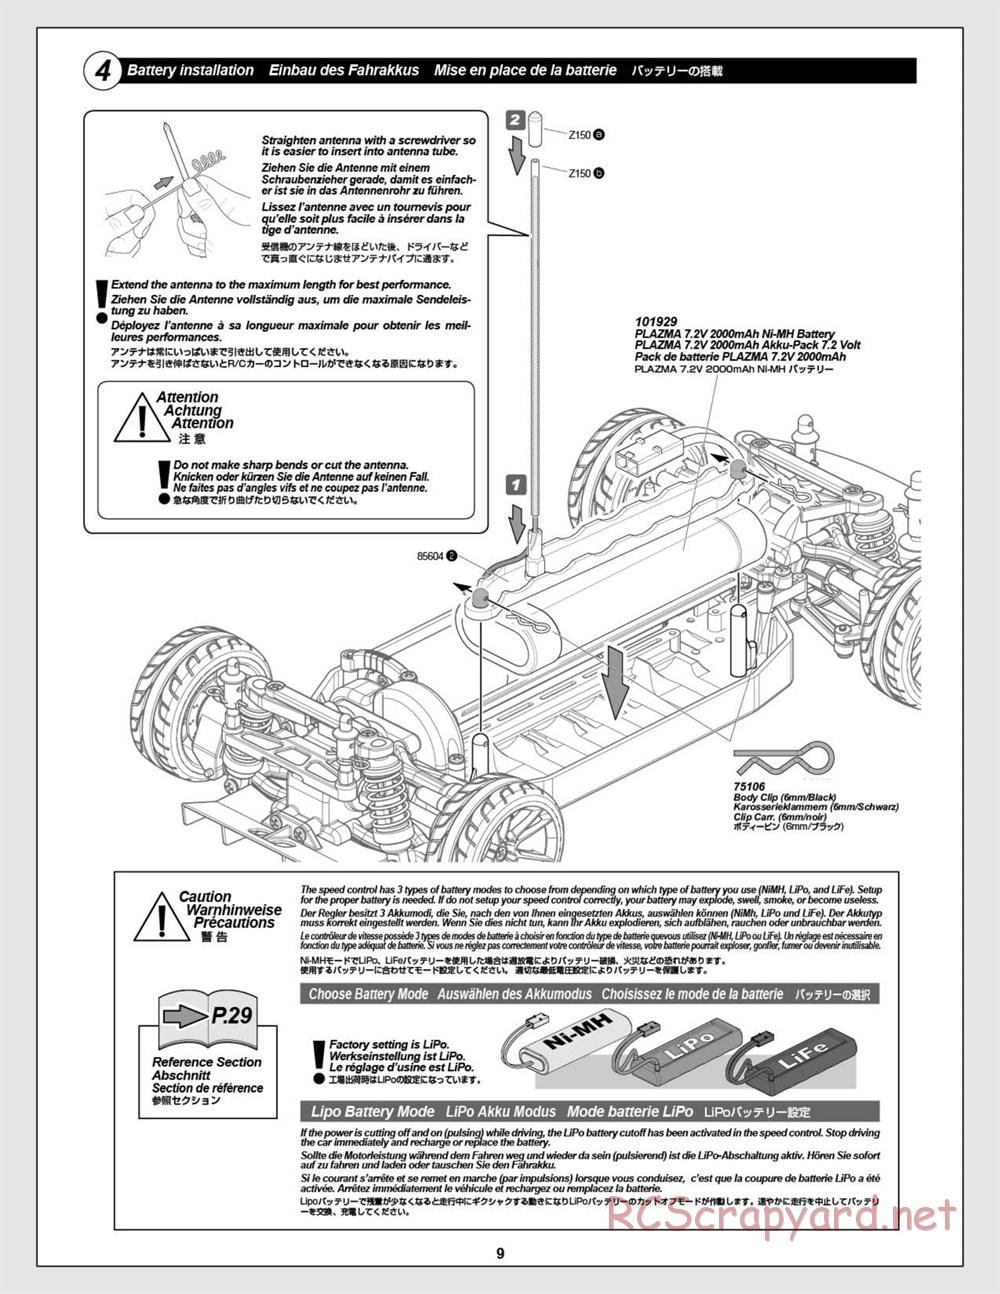 HPI - E10 - Manual - Page 9